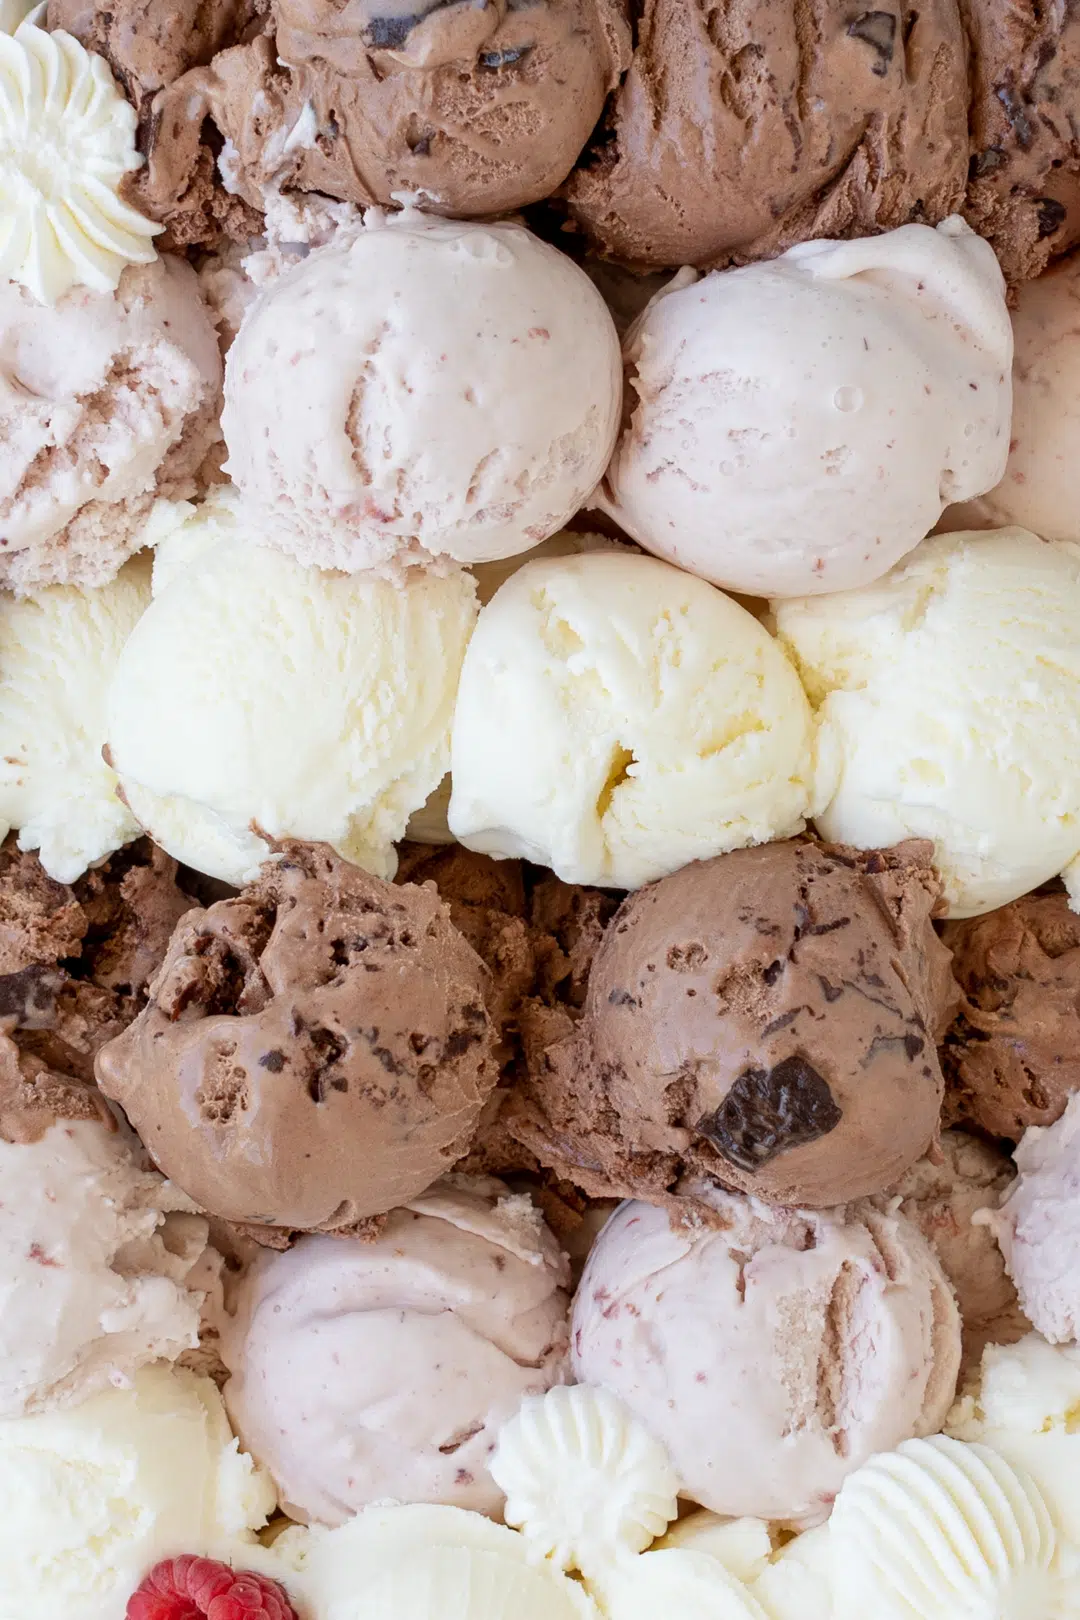 pretty up close view of chocolate, strawberry and vanilla ice cream scoops